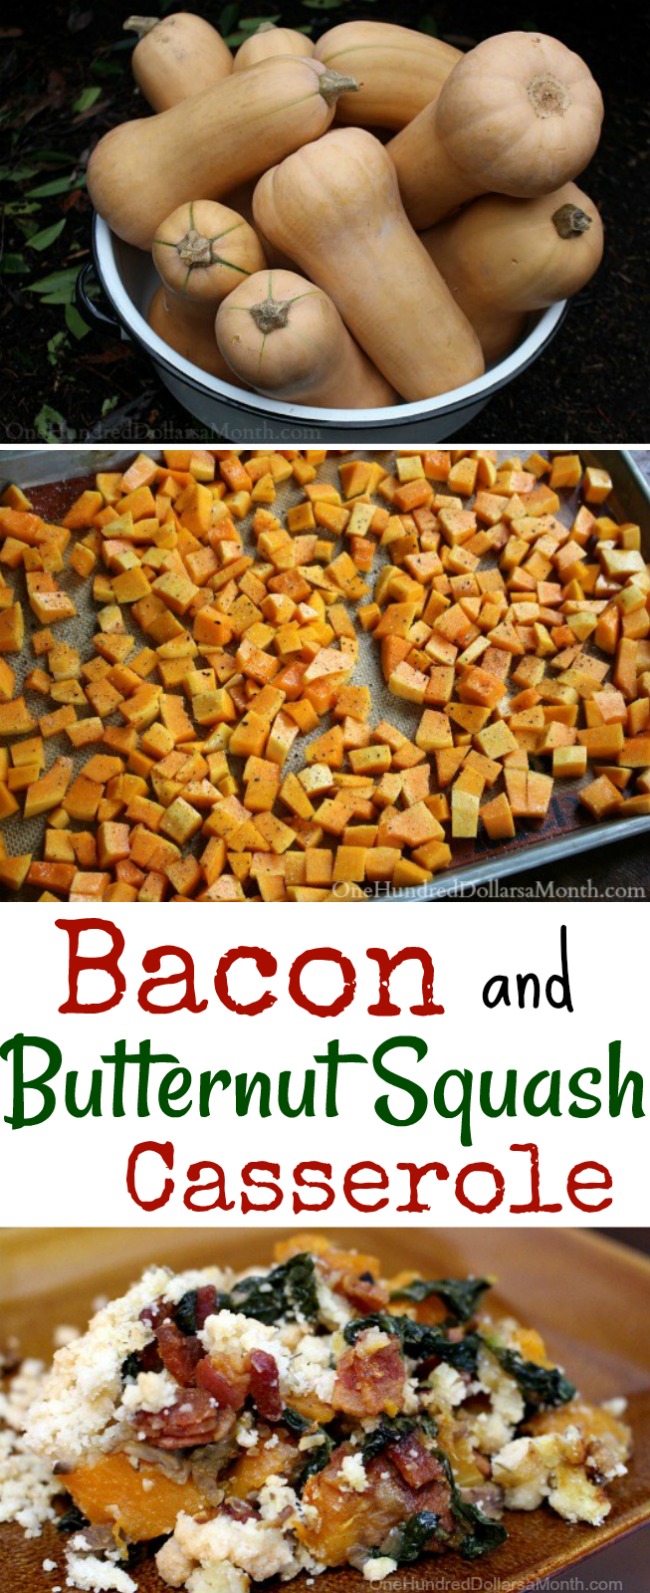 Bacon and Butternut Squash Casserole